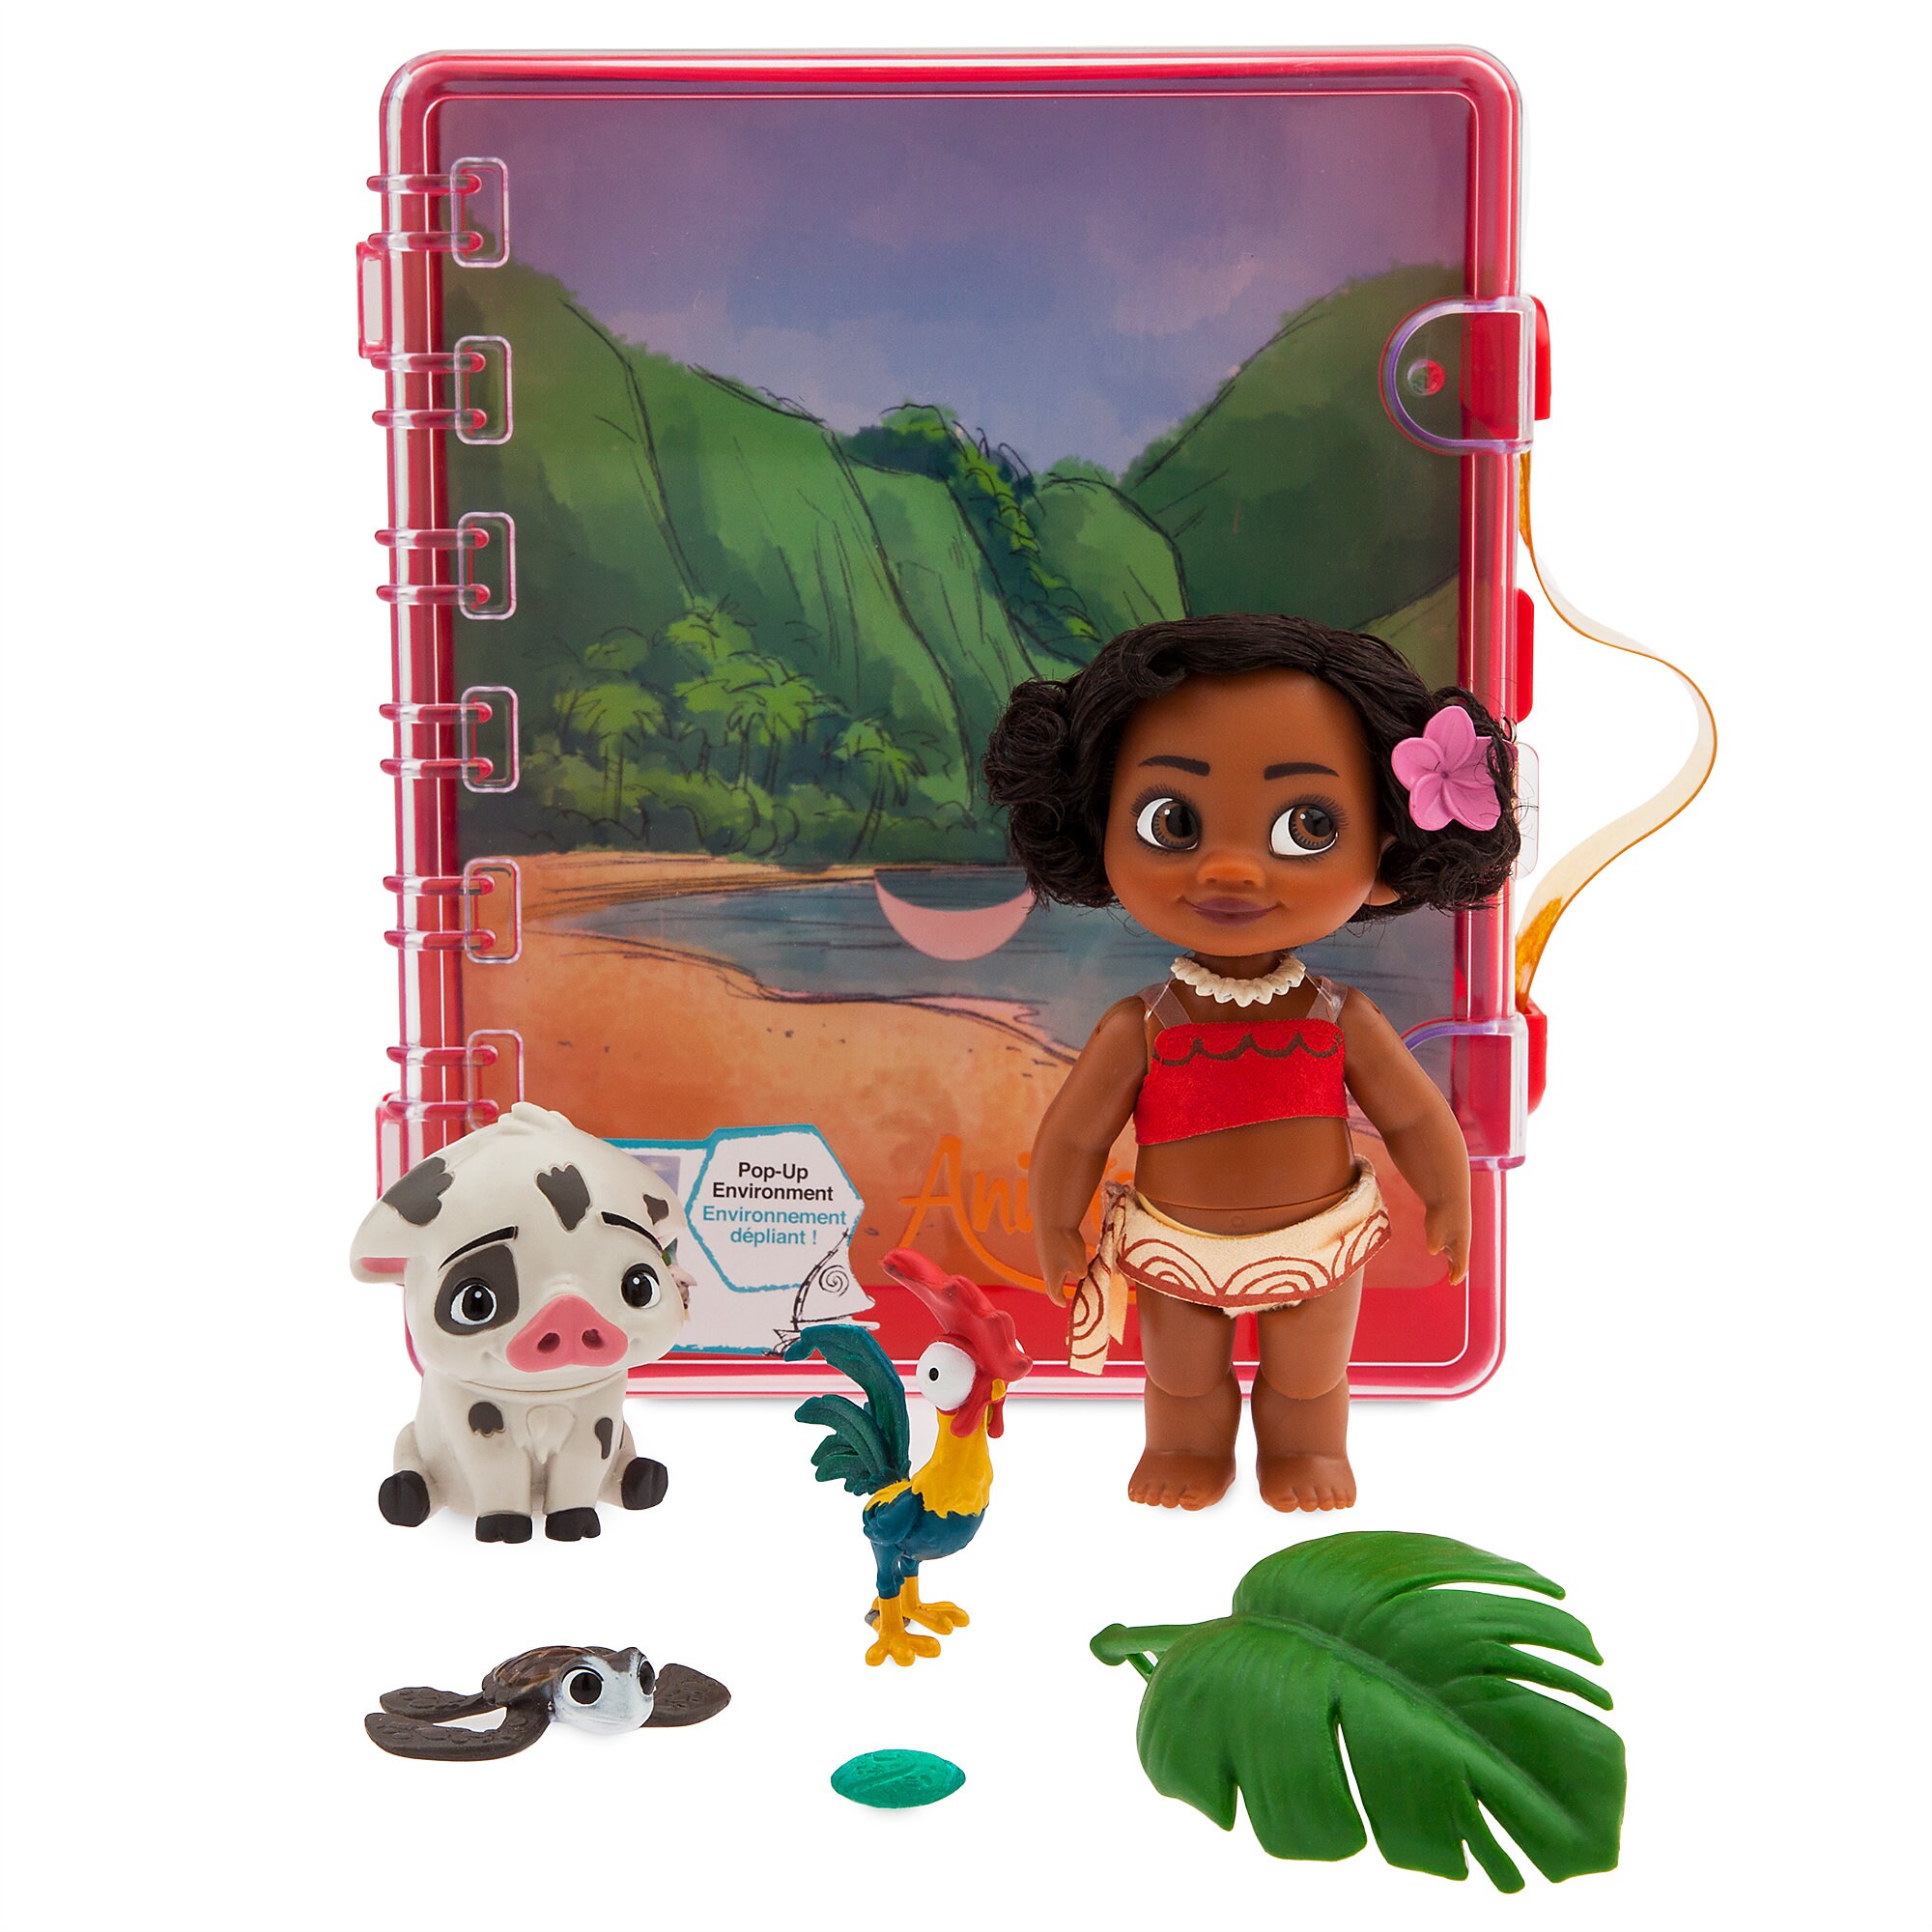 Disney Animators' Collection Moana Mini Doll Playset